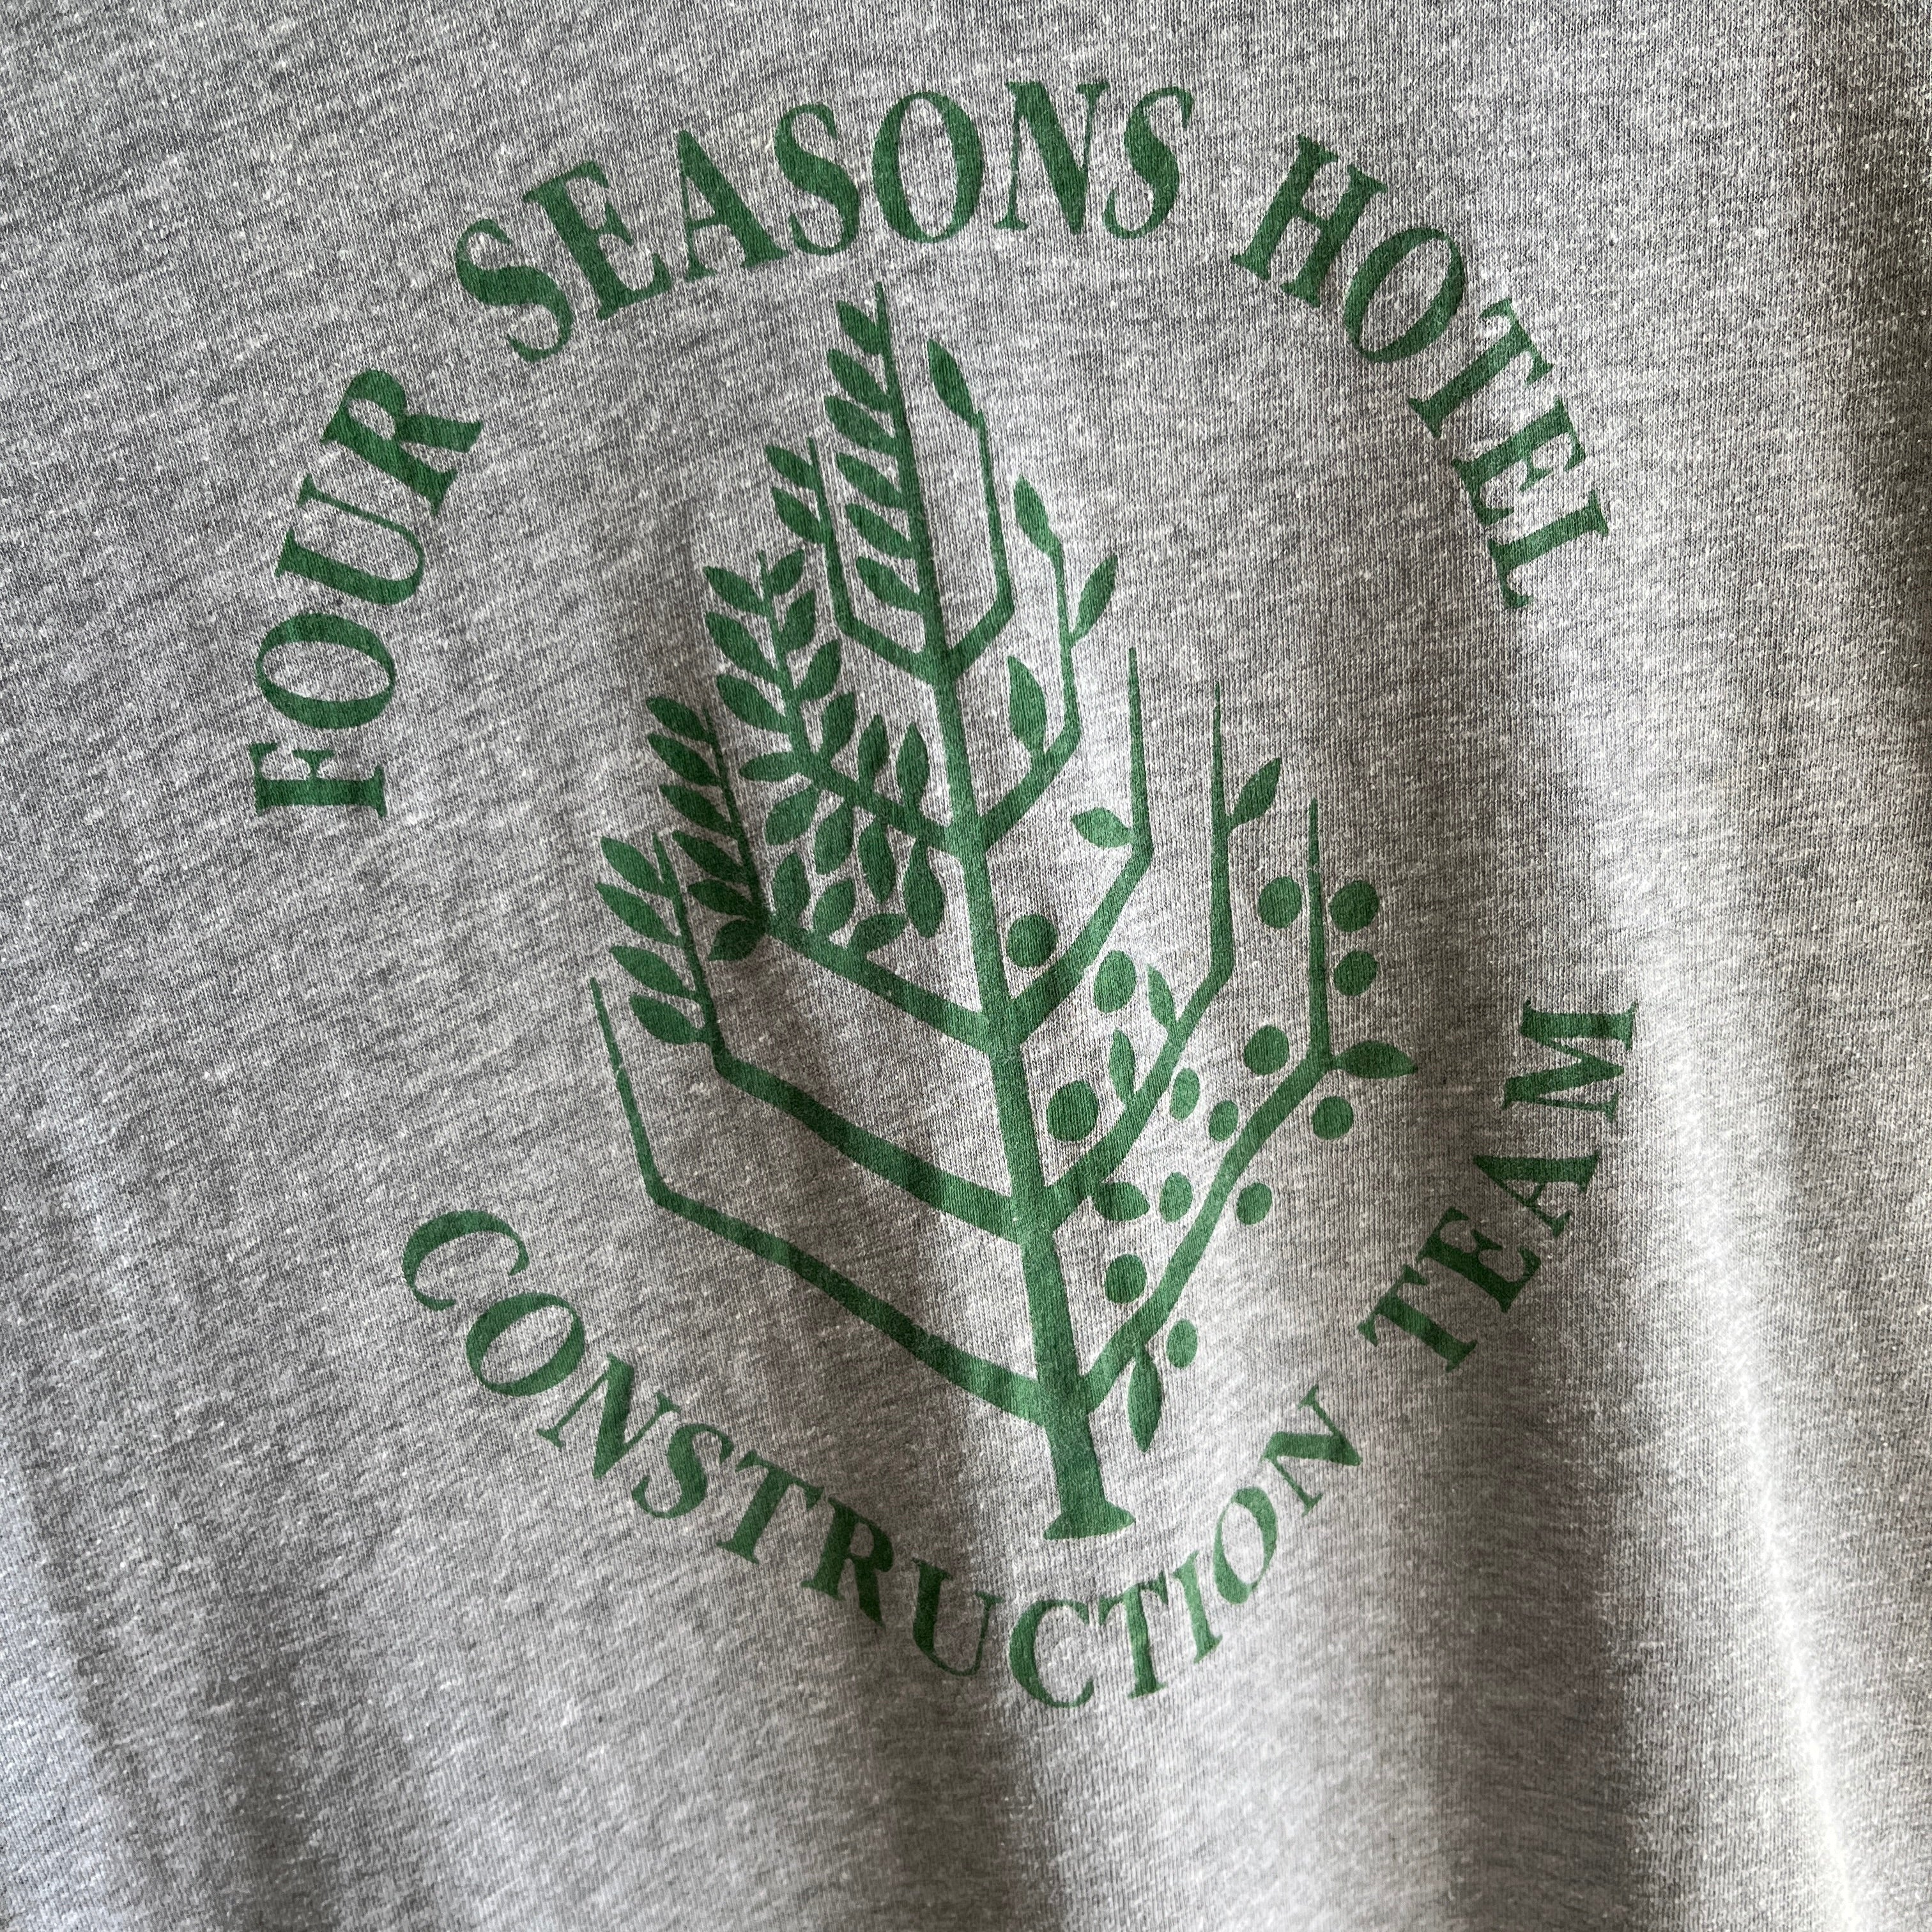 1908s Four Seasons Hotel Construction Crew T-Shirt